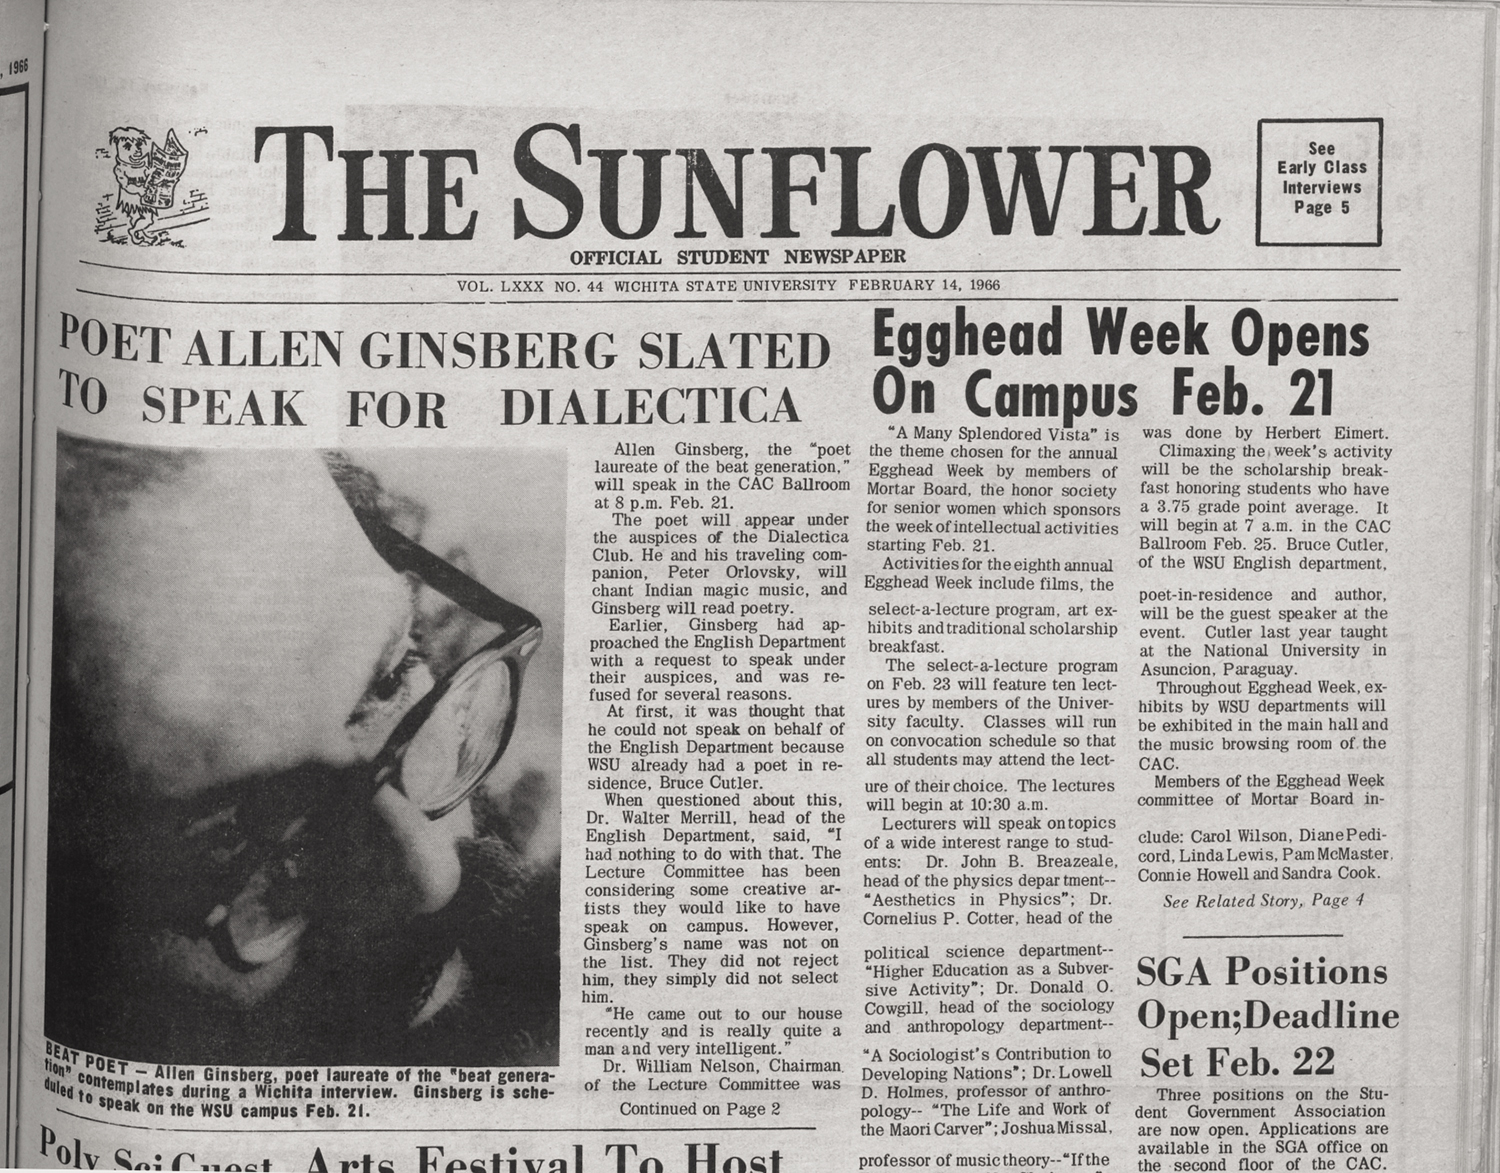 The Sunflower student newspaper